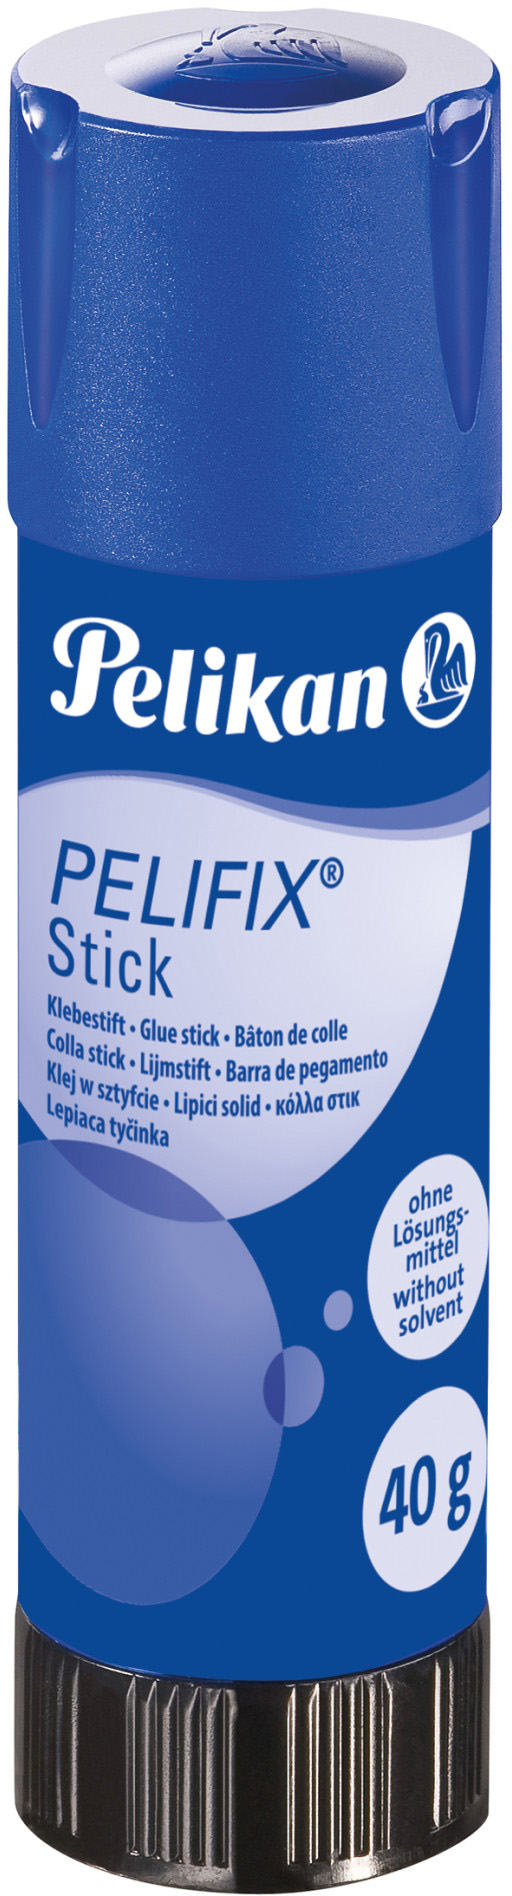 PELIKAN Pelifix Stick 335671